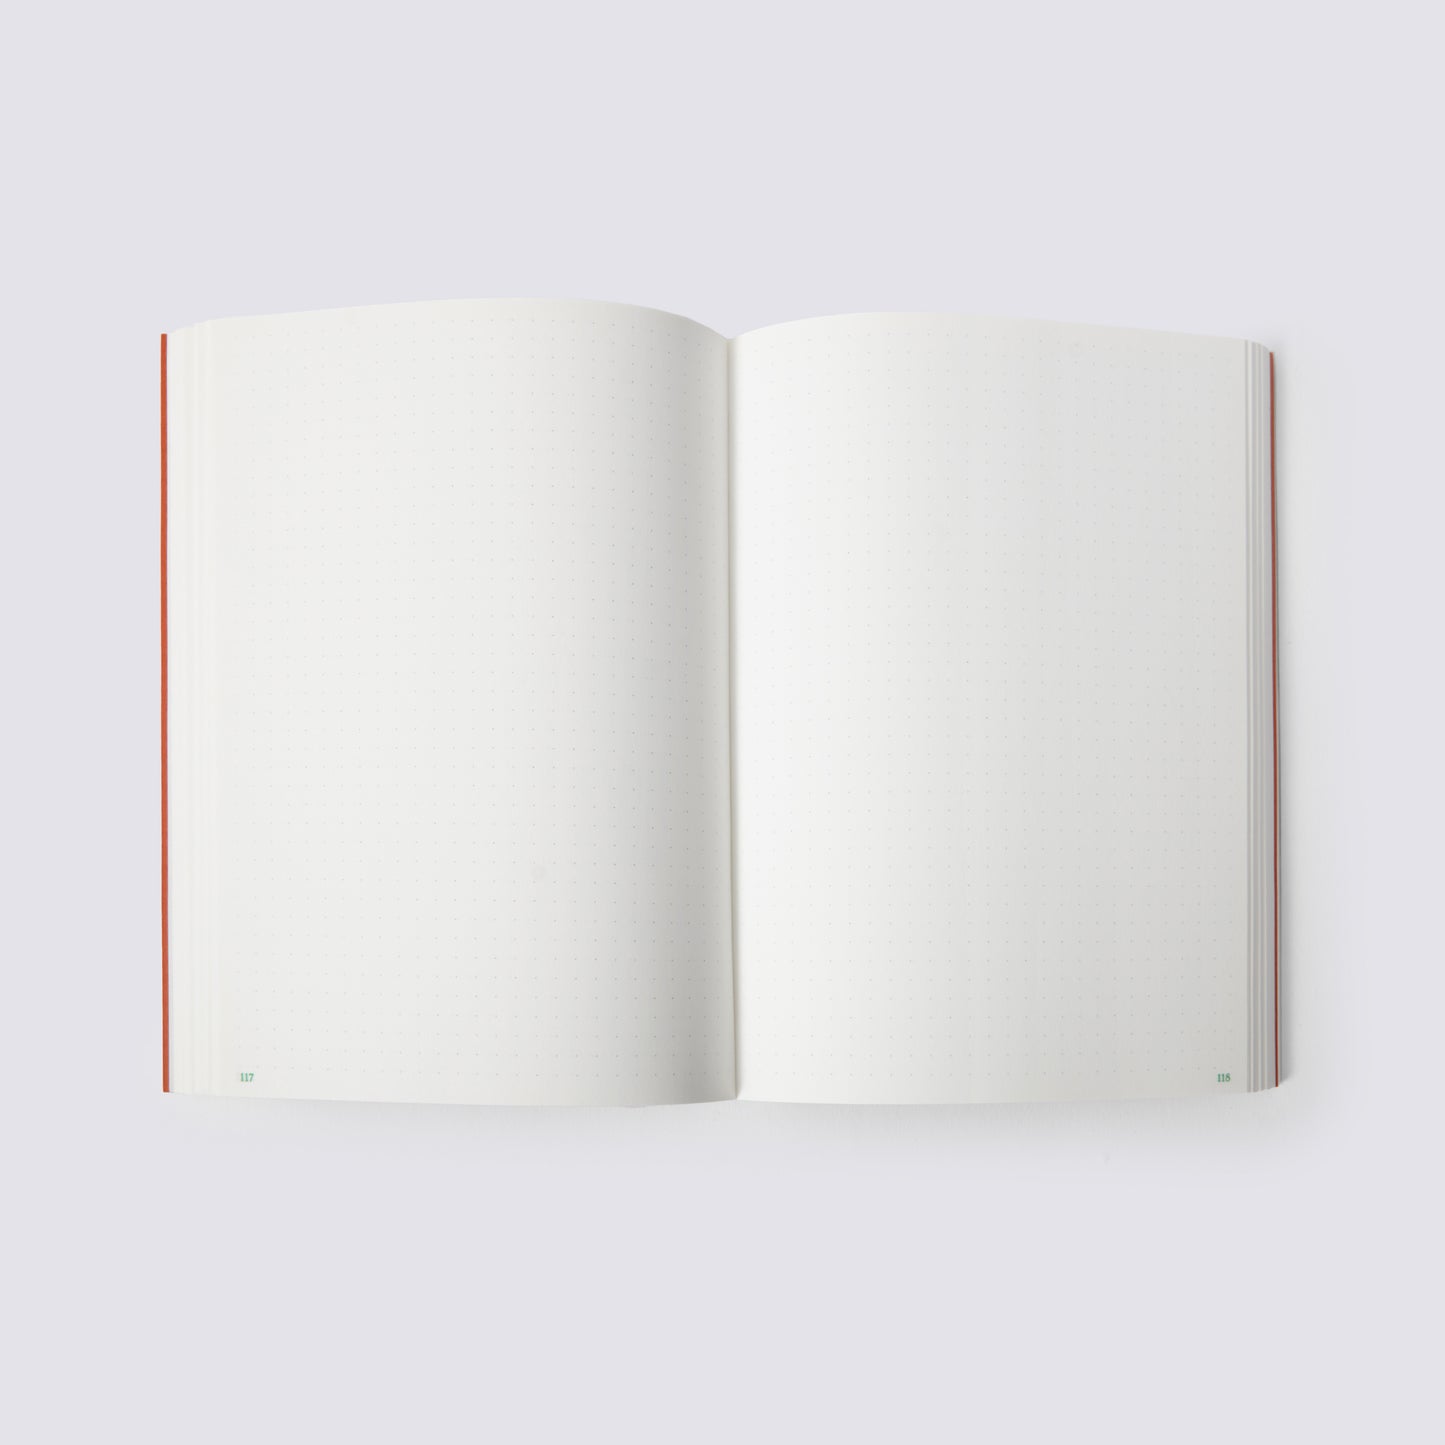 Marais Notebook and Pen Duo - Everyday Pen / Dot Grid Paper